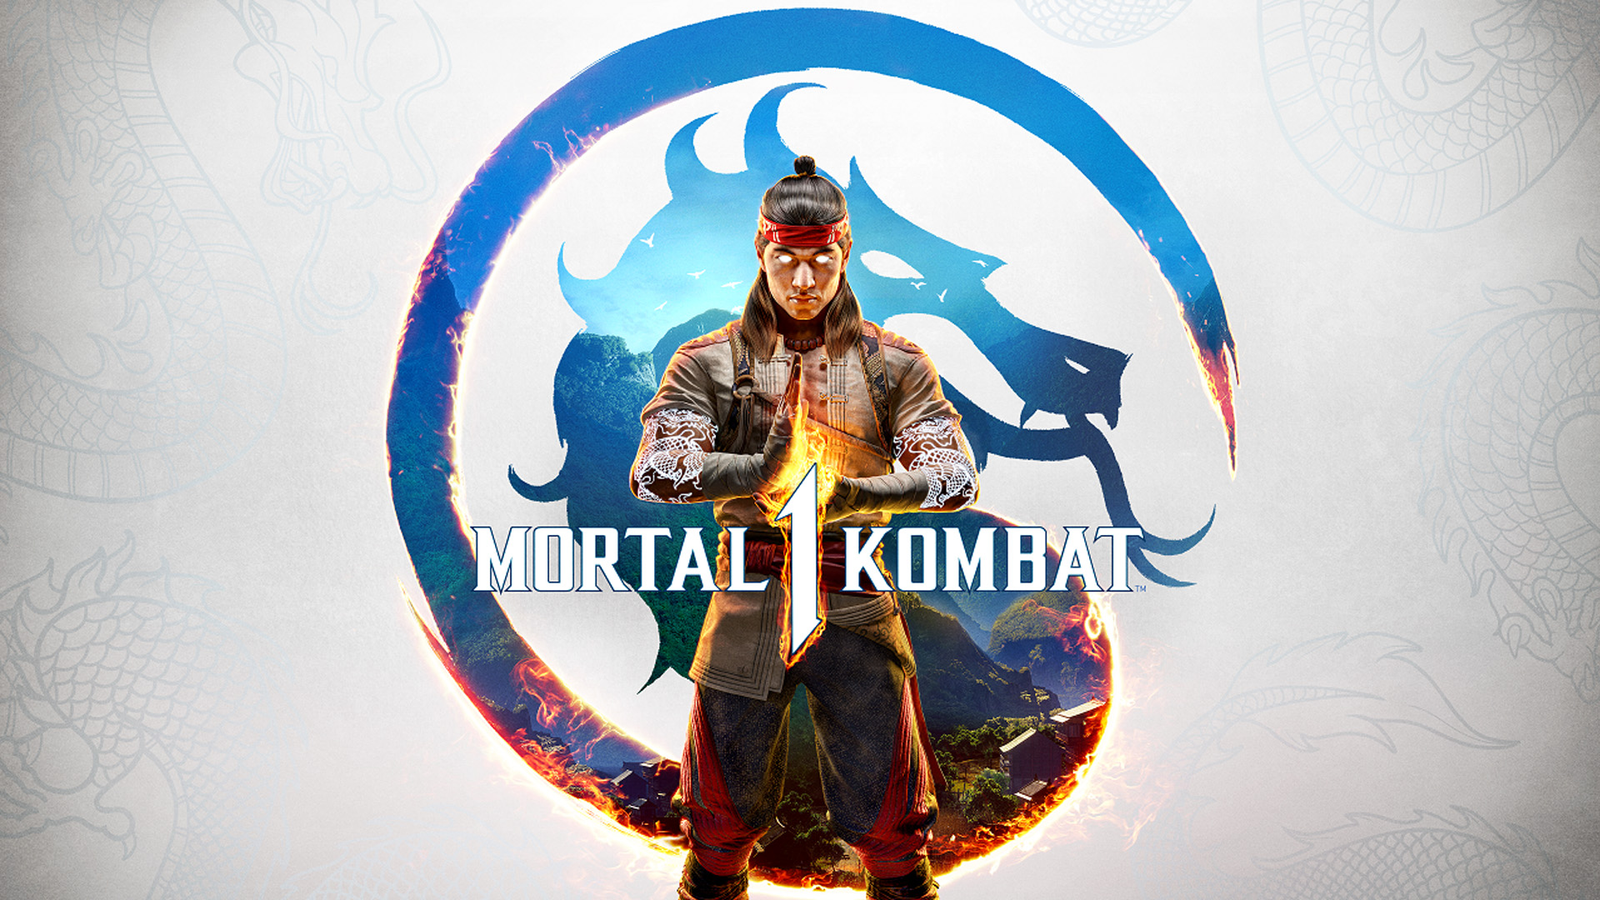 Ed Boon Has Definitely Considered A Mortal Kombat 4 Remake